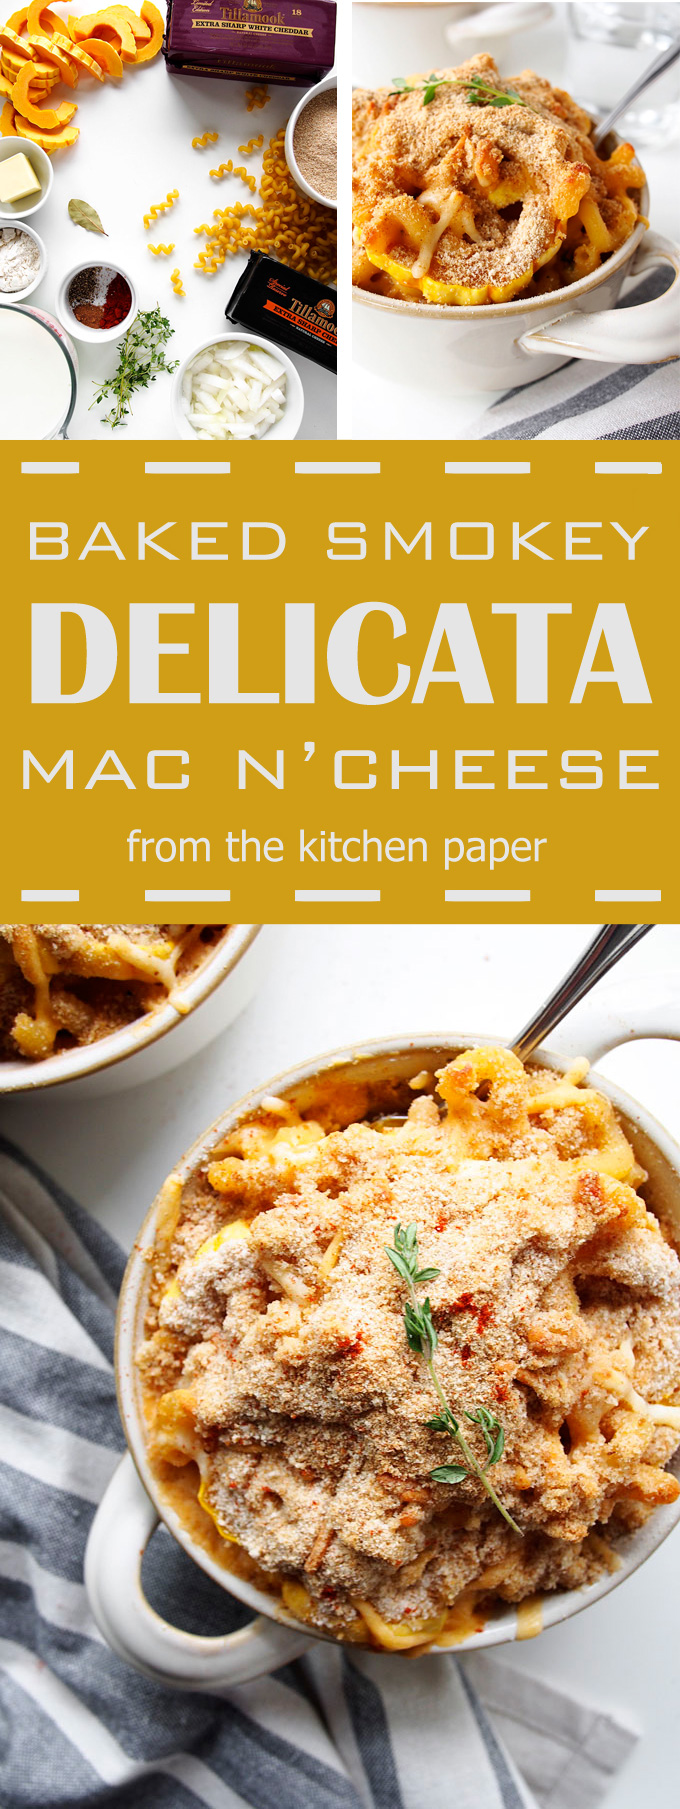 Smokey Delicata Baked Macaroni and Cheese | The Kitchen Paper